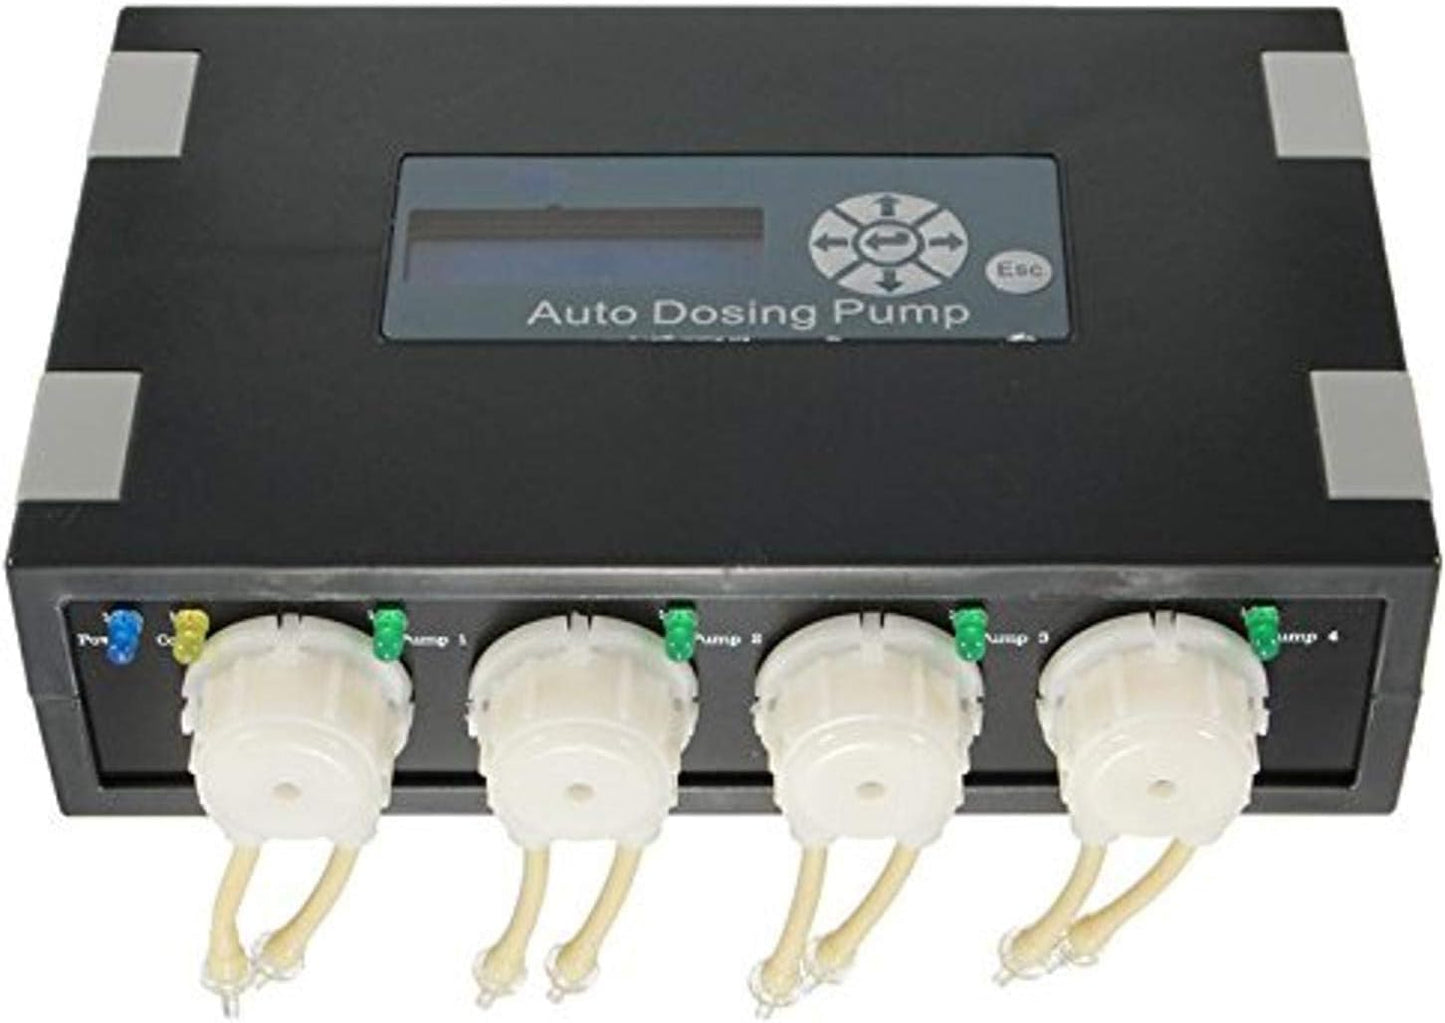 Programmable Auto Dosing Pump DP-4, Black